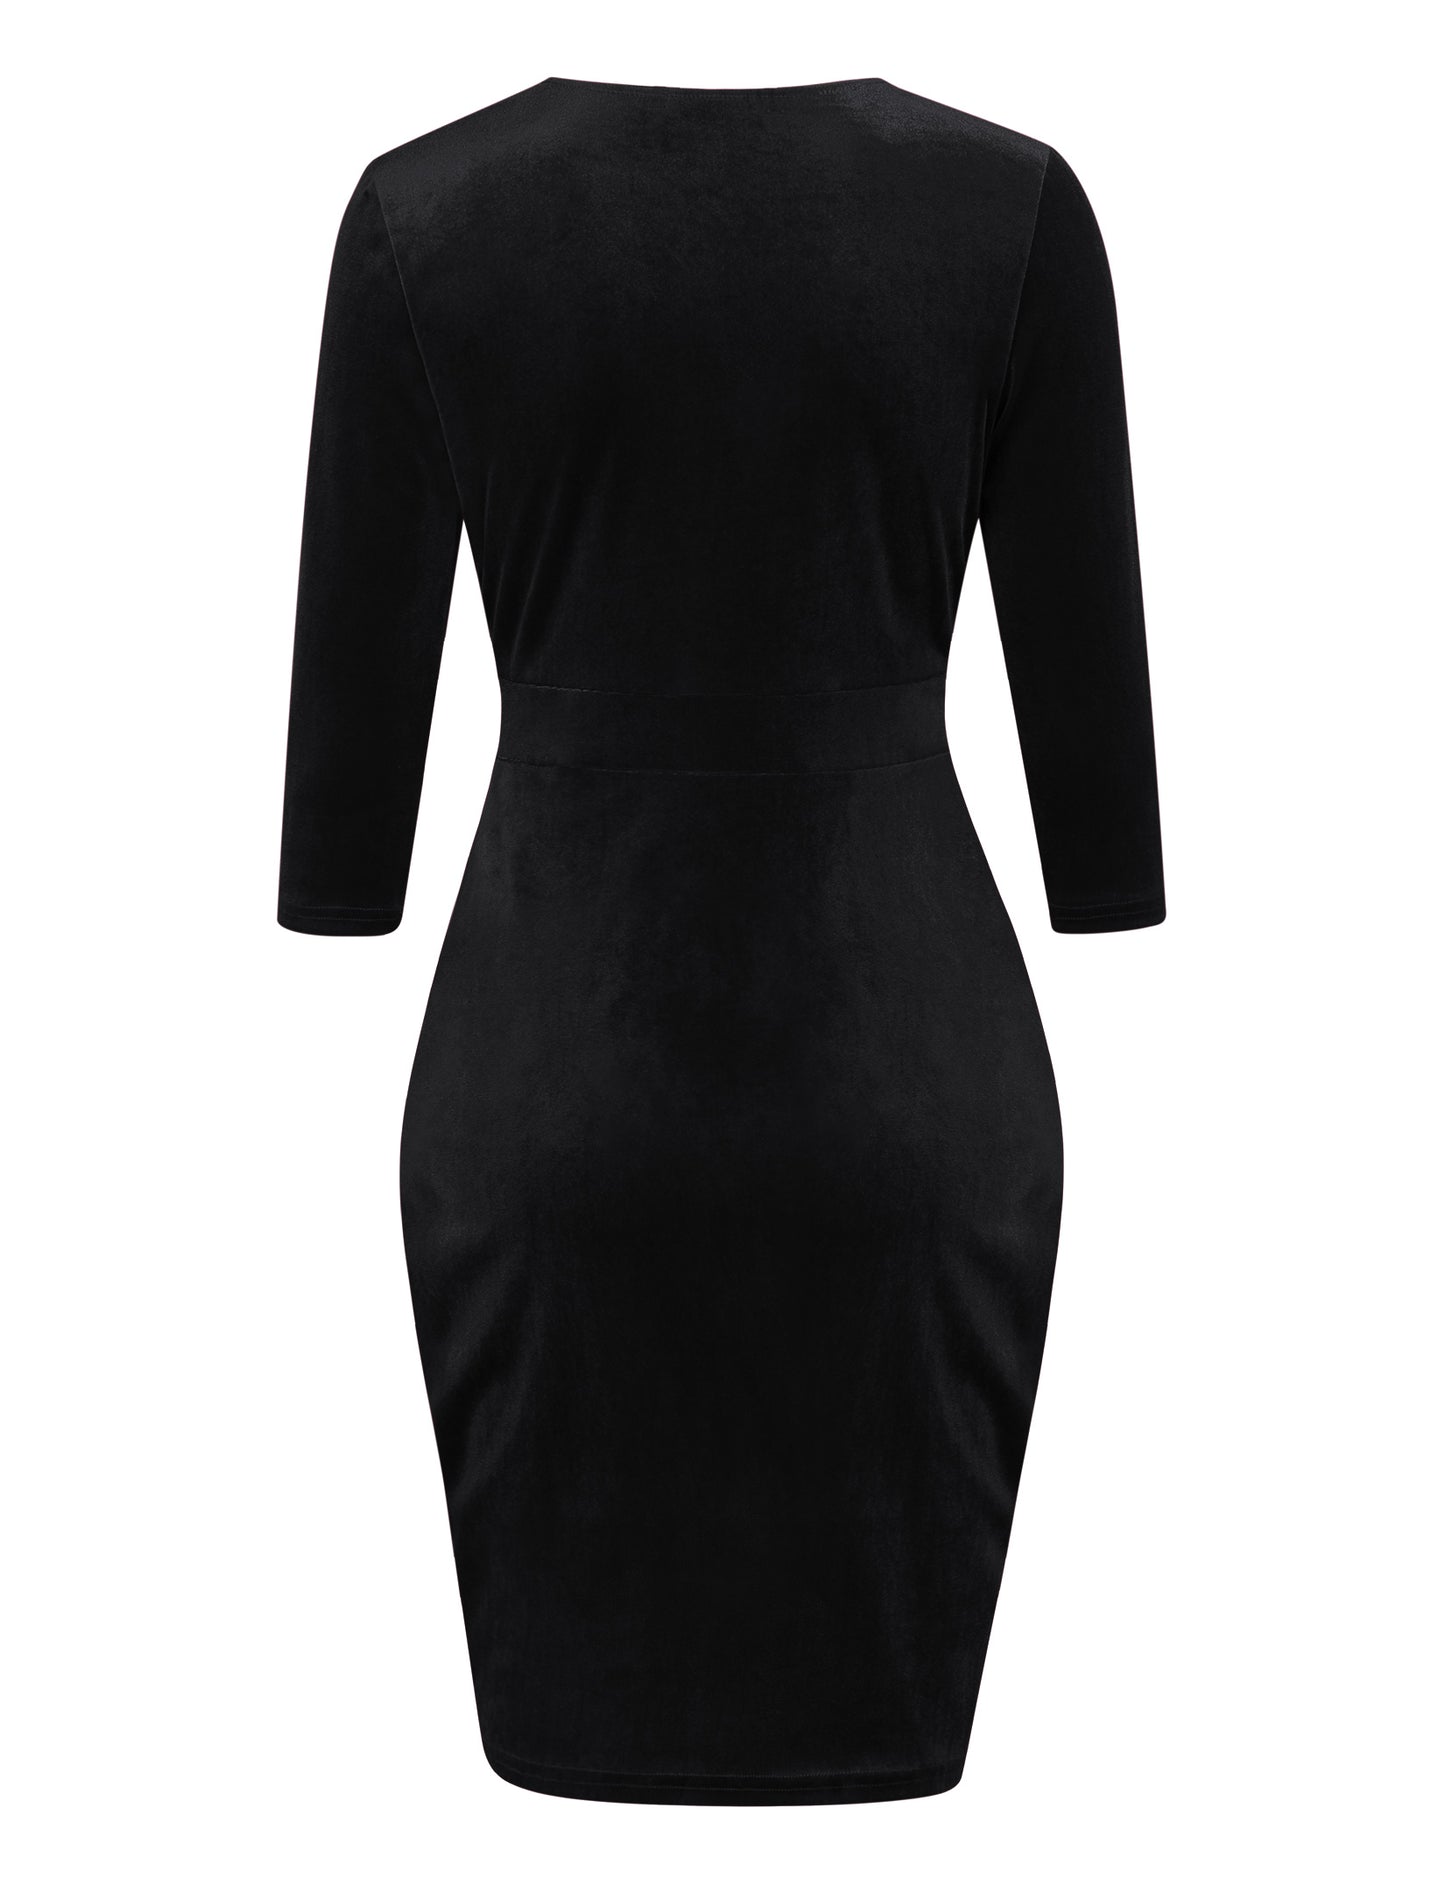 YESFASHION Women's Velvet Tulip Bodycon Party Dress Black